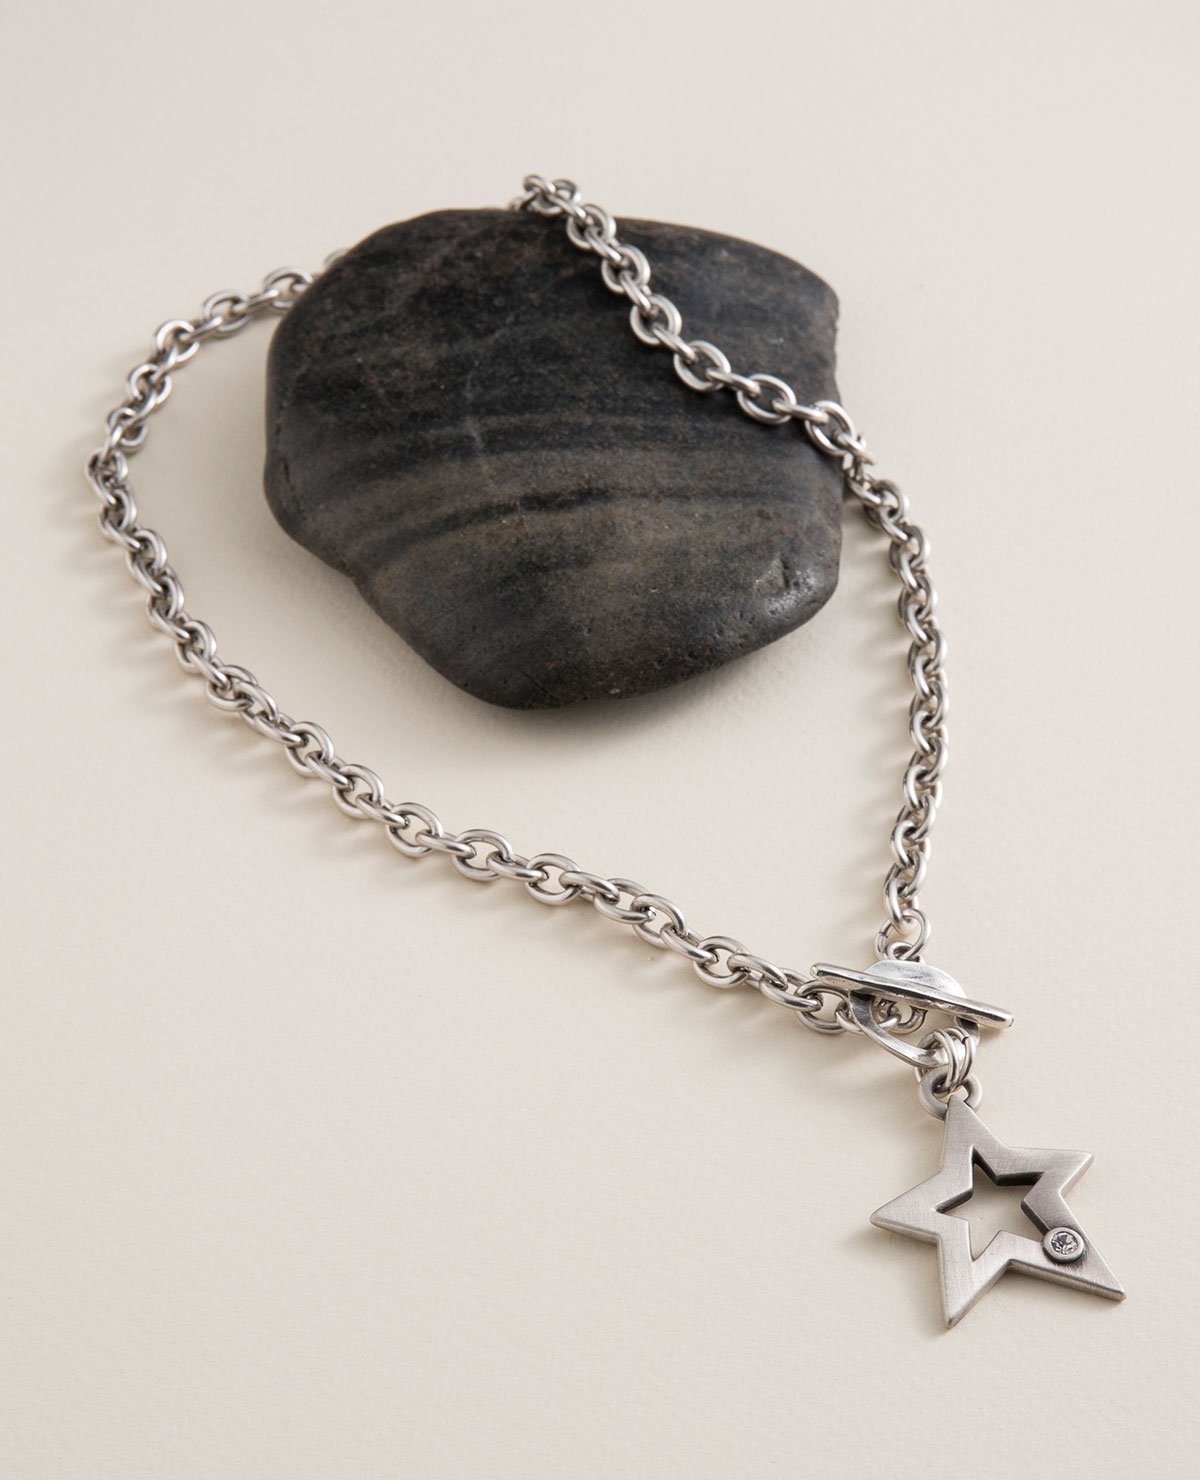 Danon star necklace